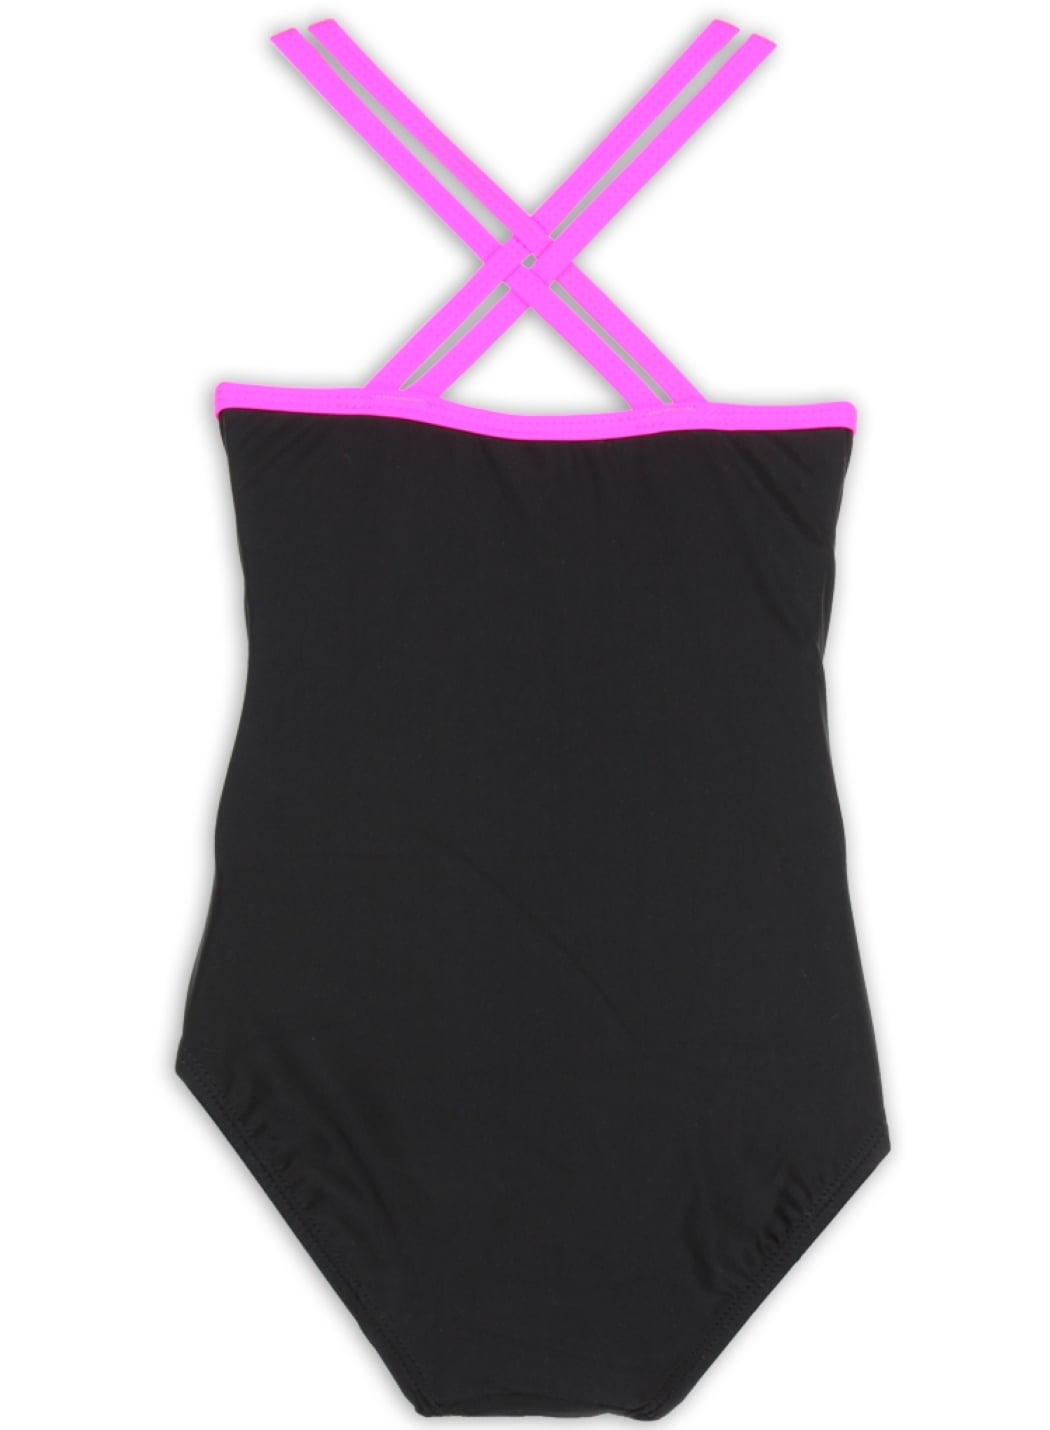 NWT Paul Frank Toddler Girl's 3T Black 1 Pc Swimsuit Pink Julius Monkey Swim 